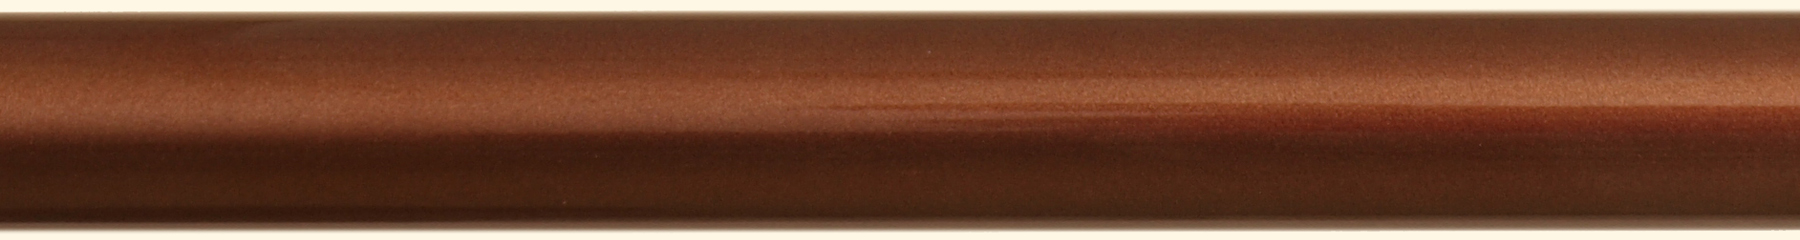 Copper Metallic Tube Sample